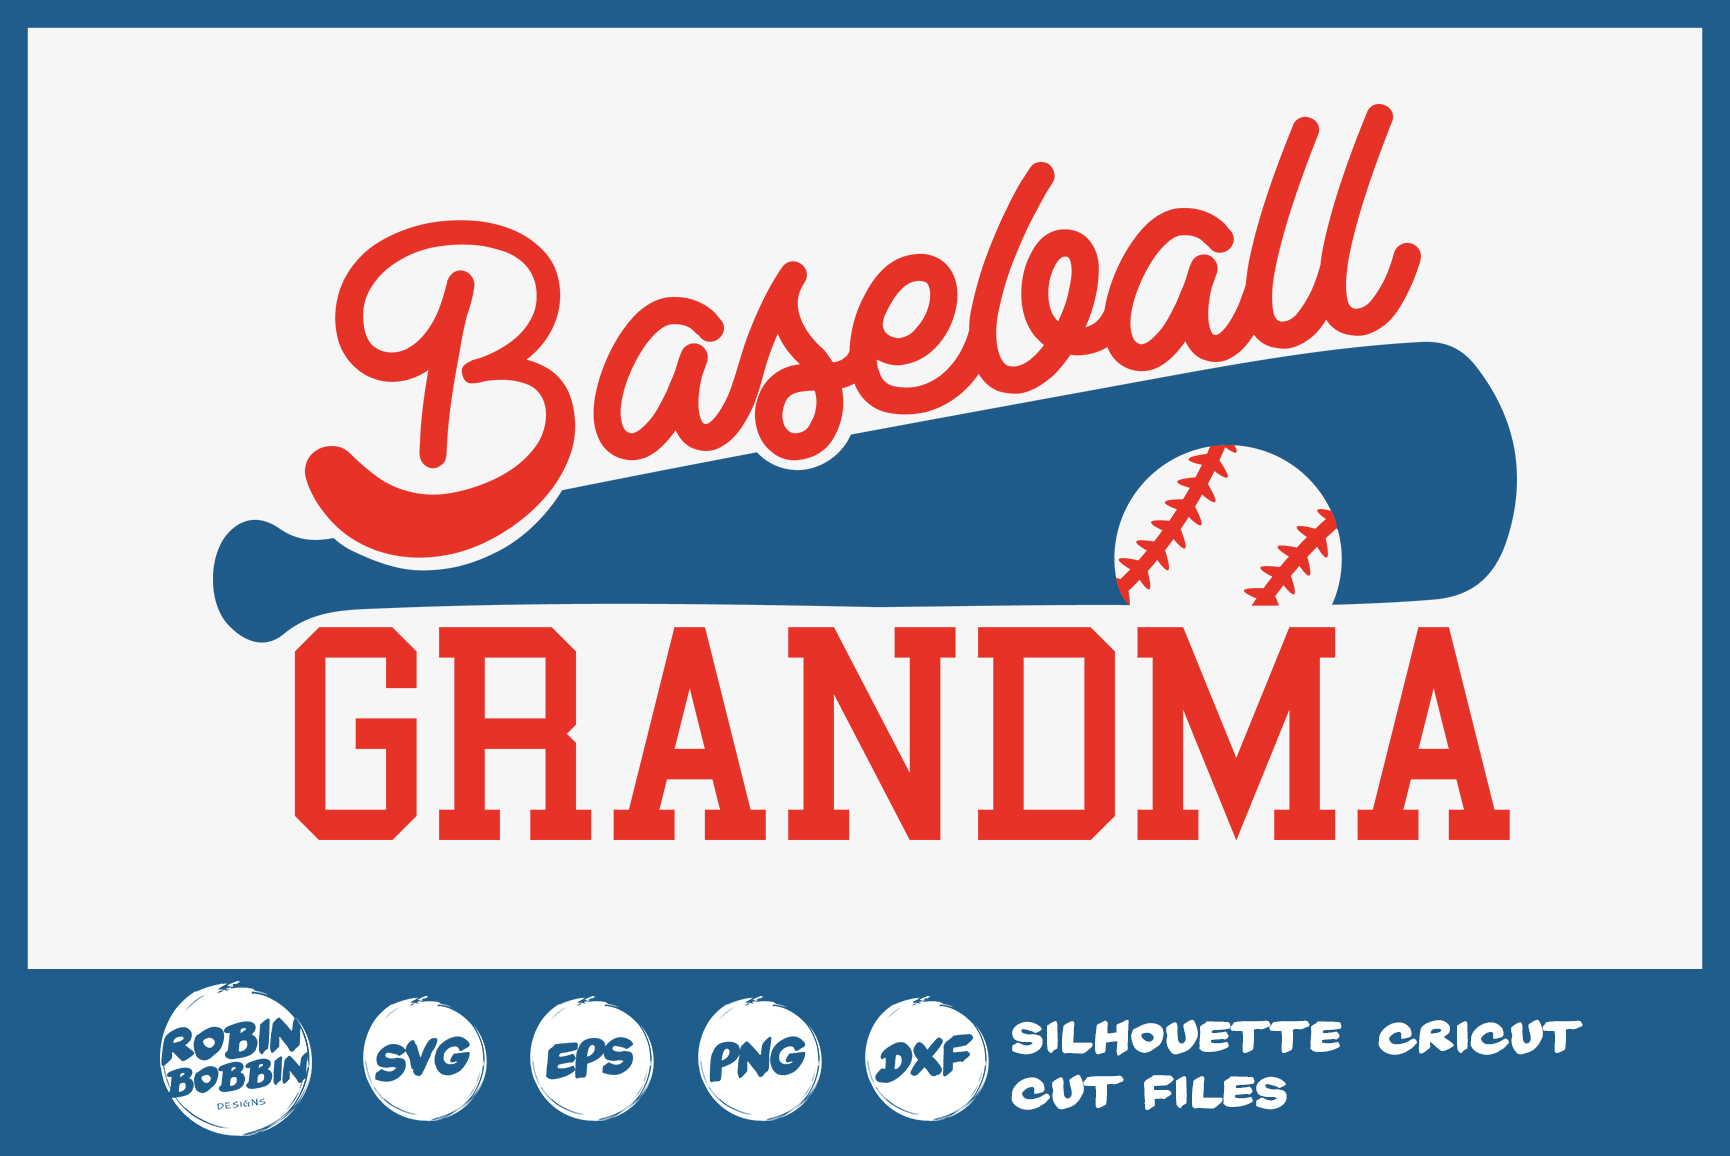 Download Baseball Grandma SVG - Baseball SVG